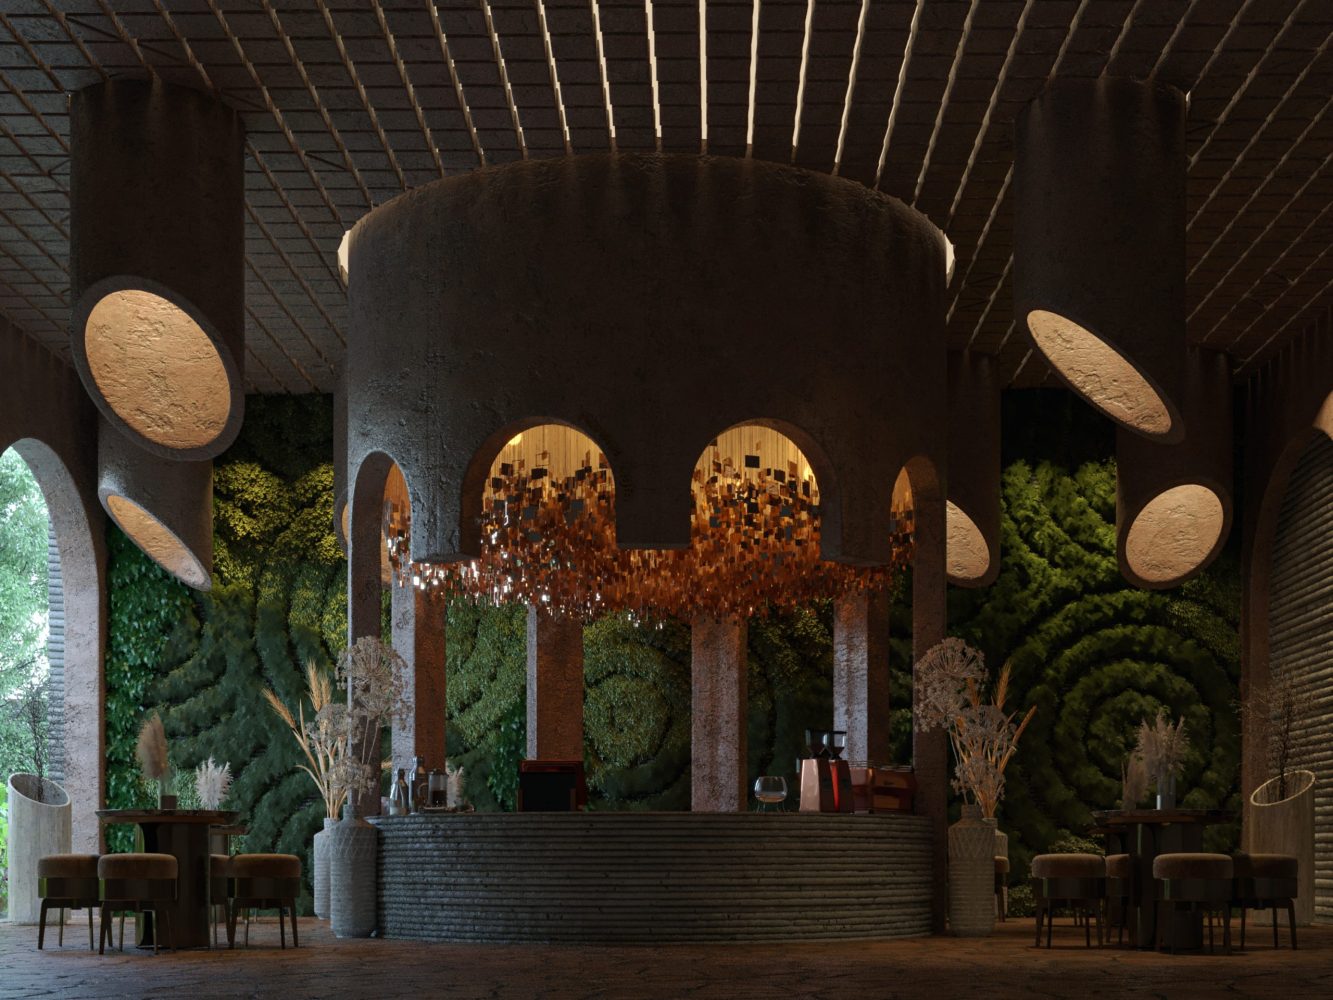 REXANA CAFE DESIGN - INTERIOR DESIGN - CASTLE MOOD - HISTORICAL BUILDING - LIGHTING